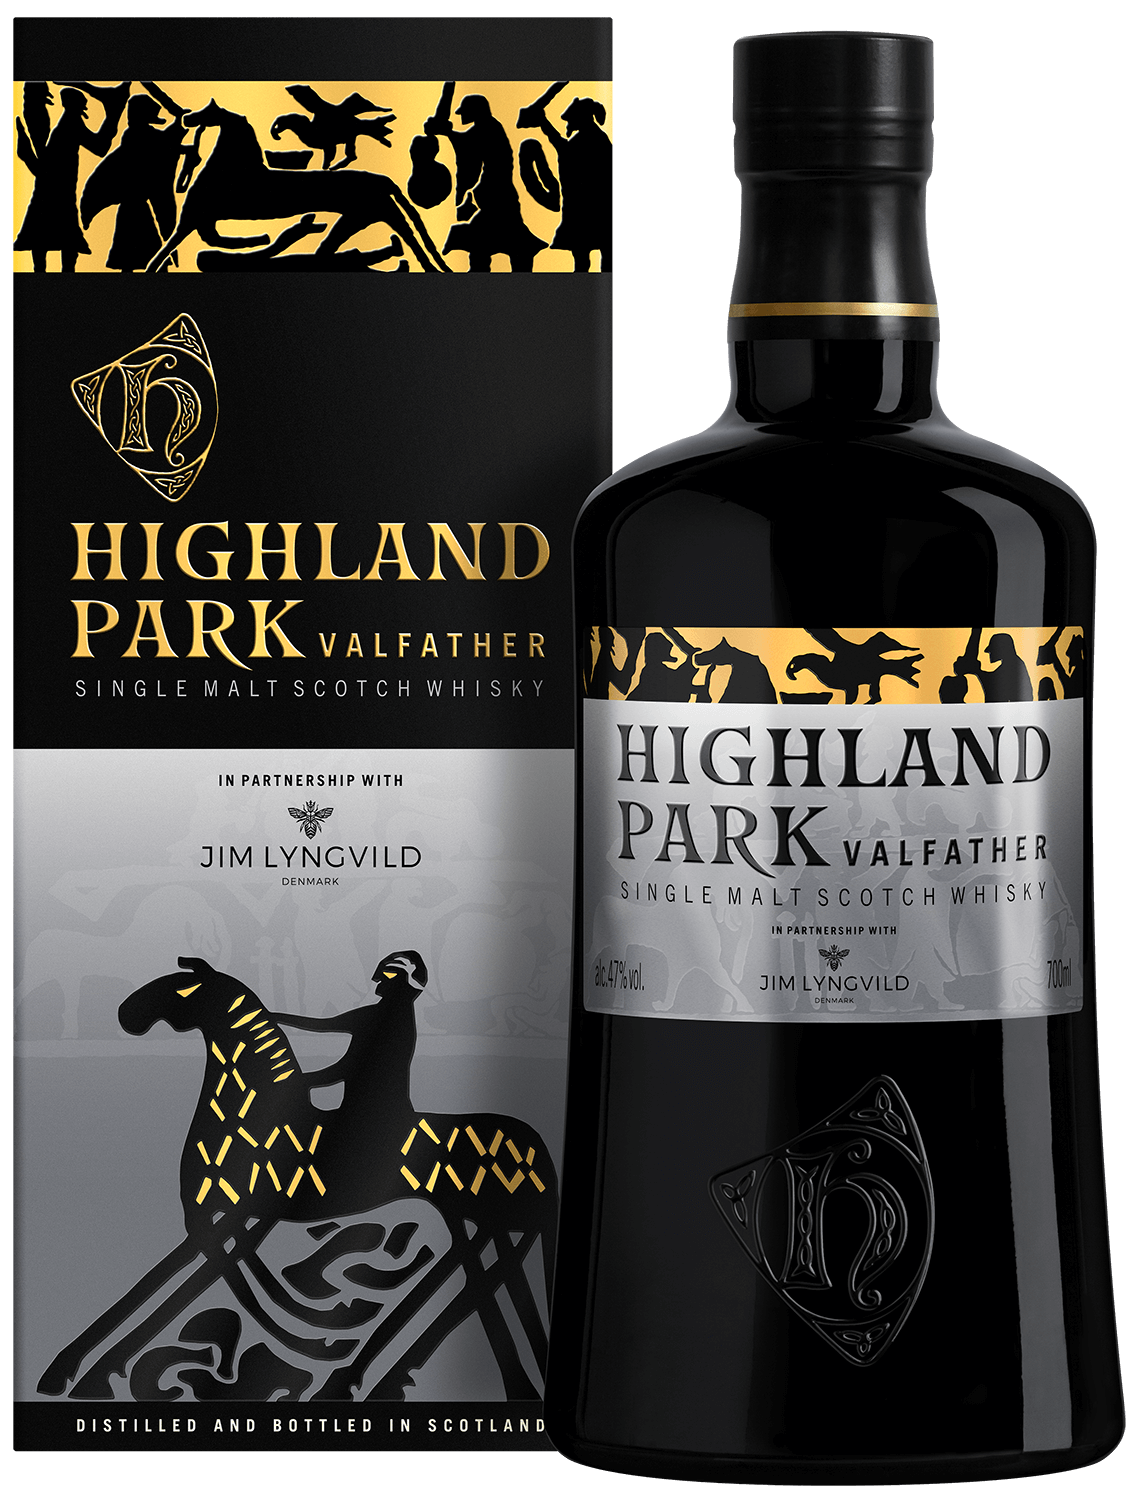 Highland Park Valfather single malt scotch whisky (gift box) highland park 30 y o single malt scotch whisky gift box